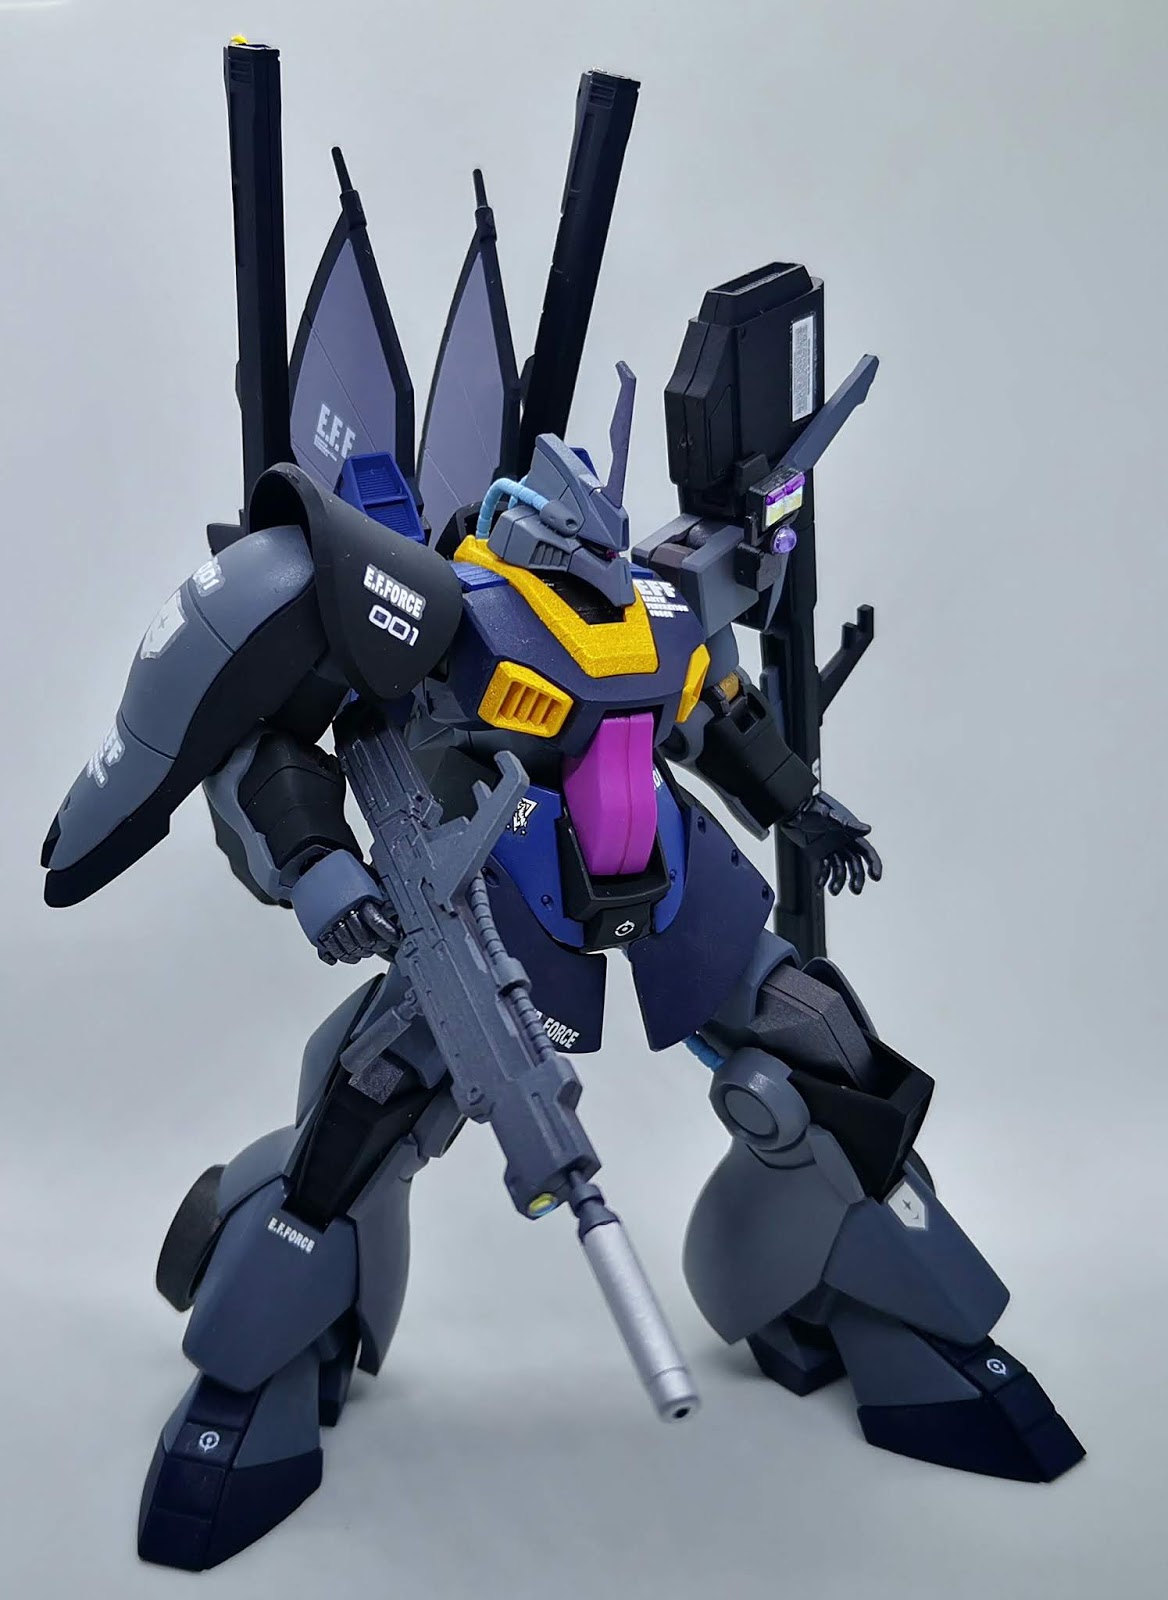 Details about   WarslugX model Metal Modified parts for Bandai HGUC 1/144 MSK-008 Dijeh Gundam 